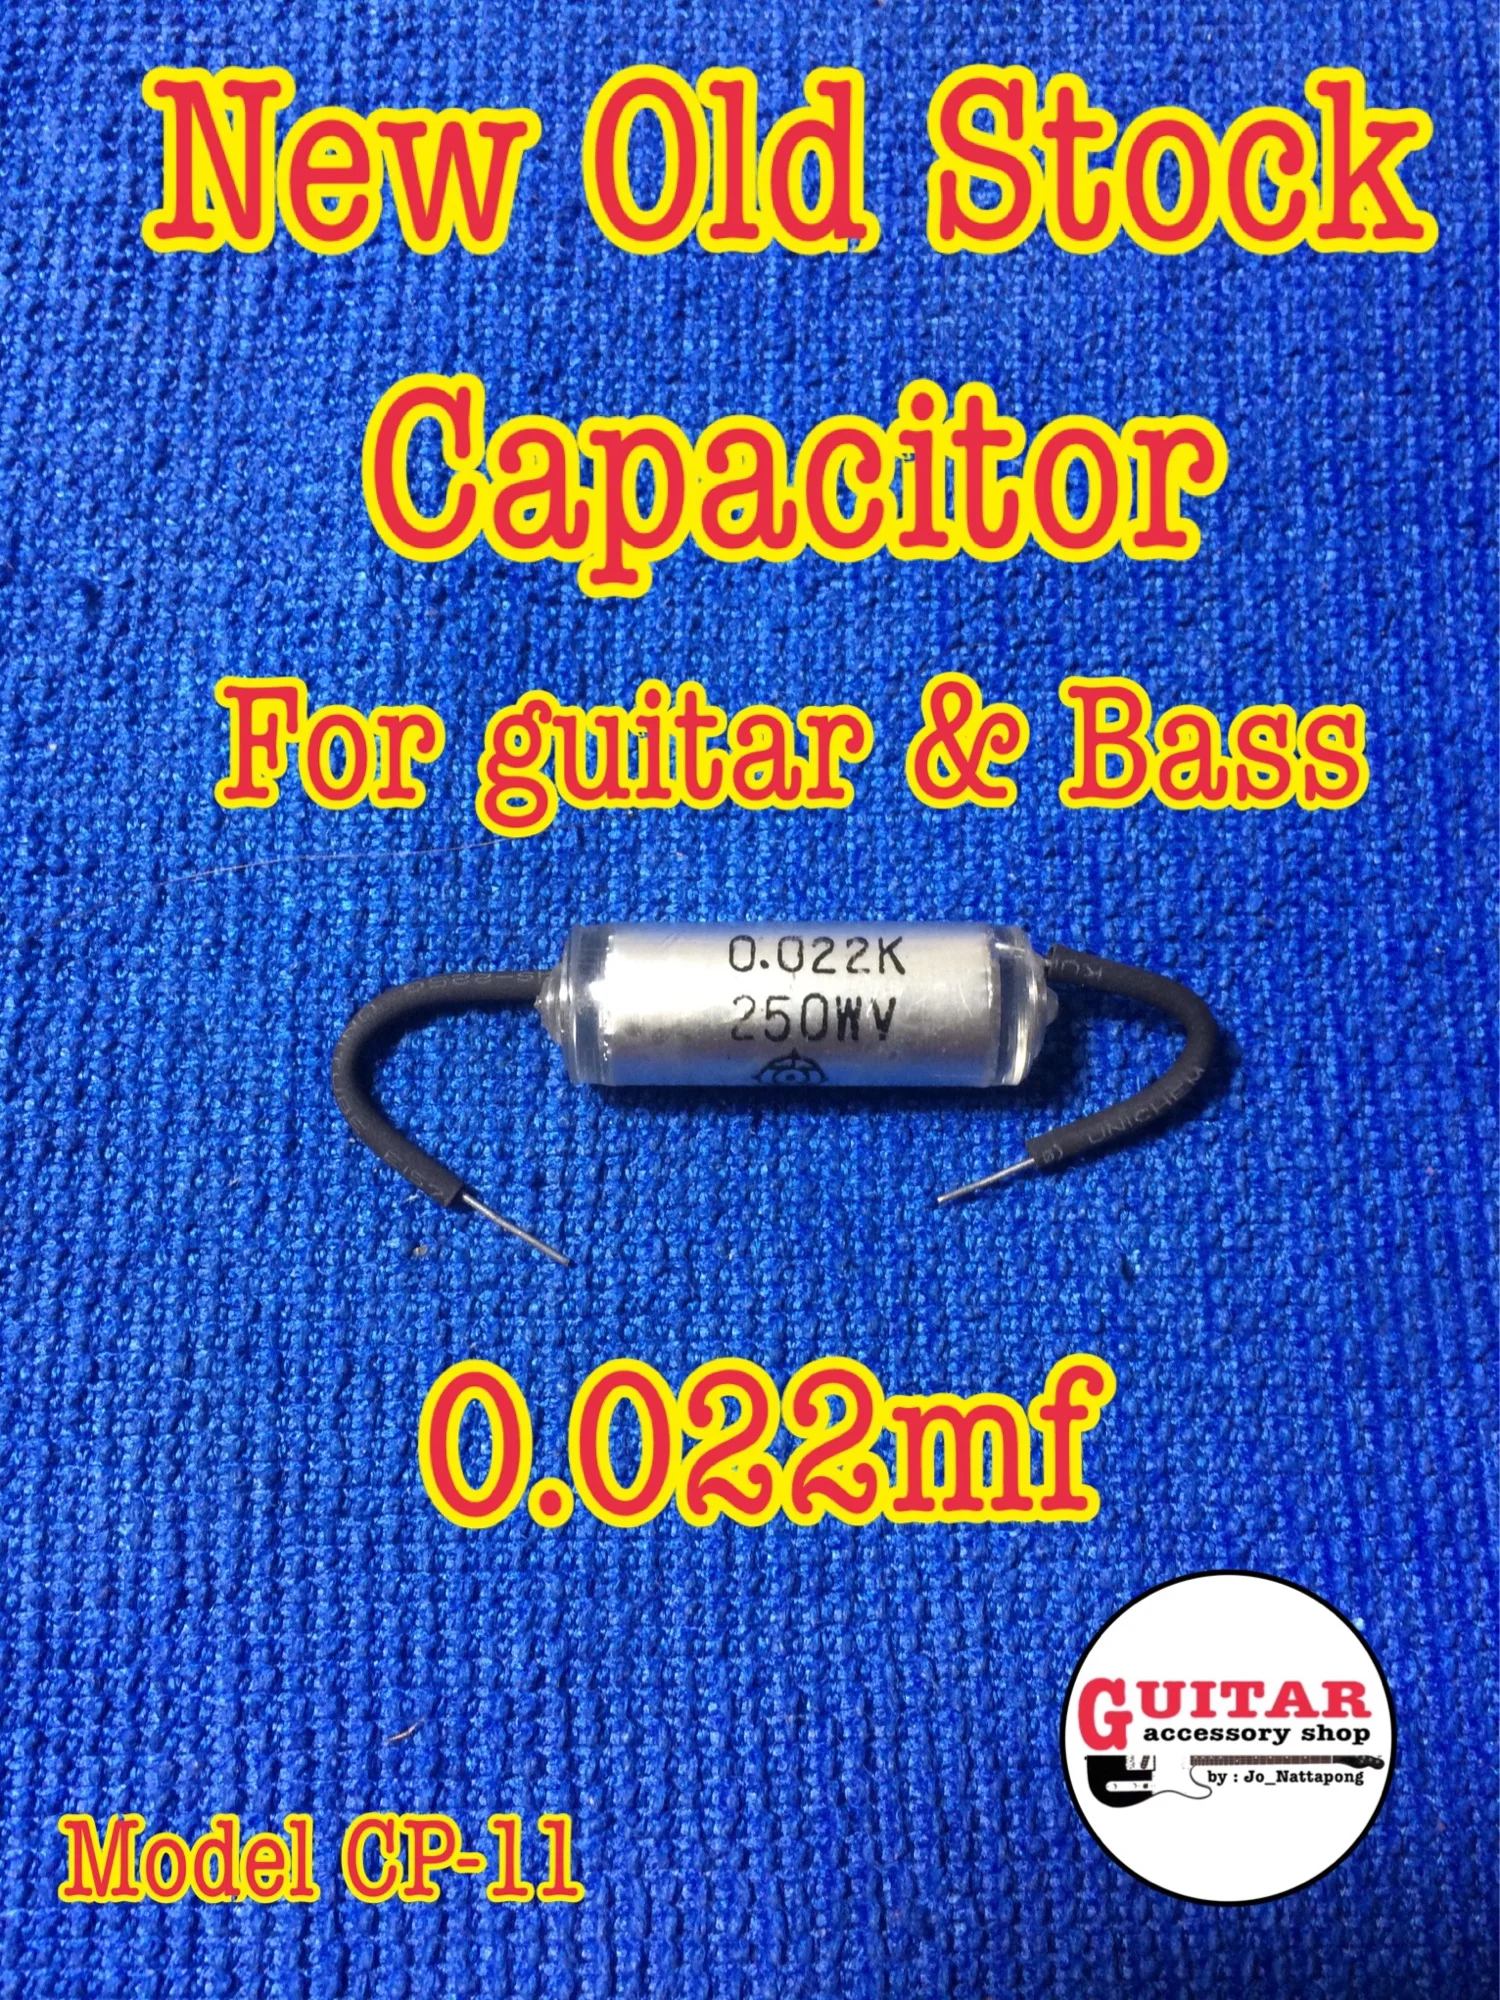 Capacitor for guitar&bass